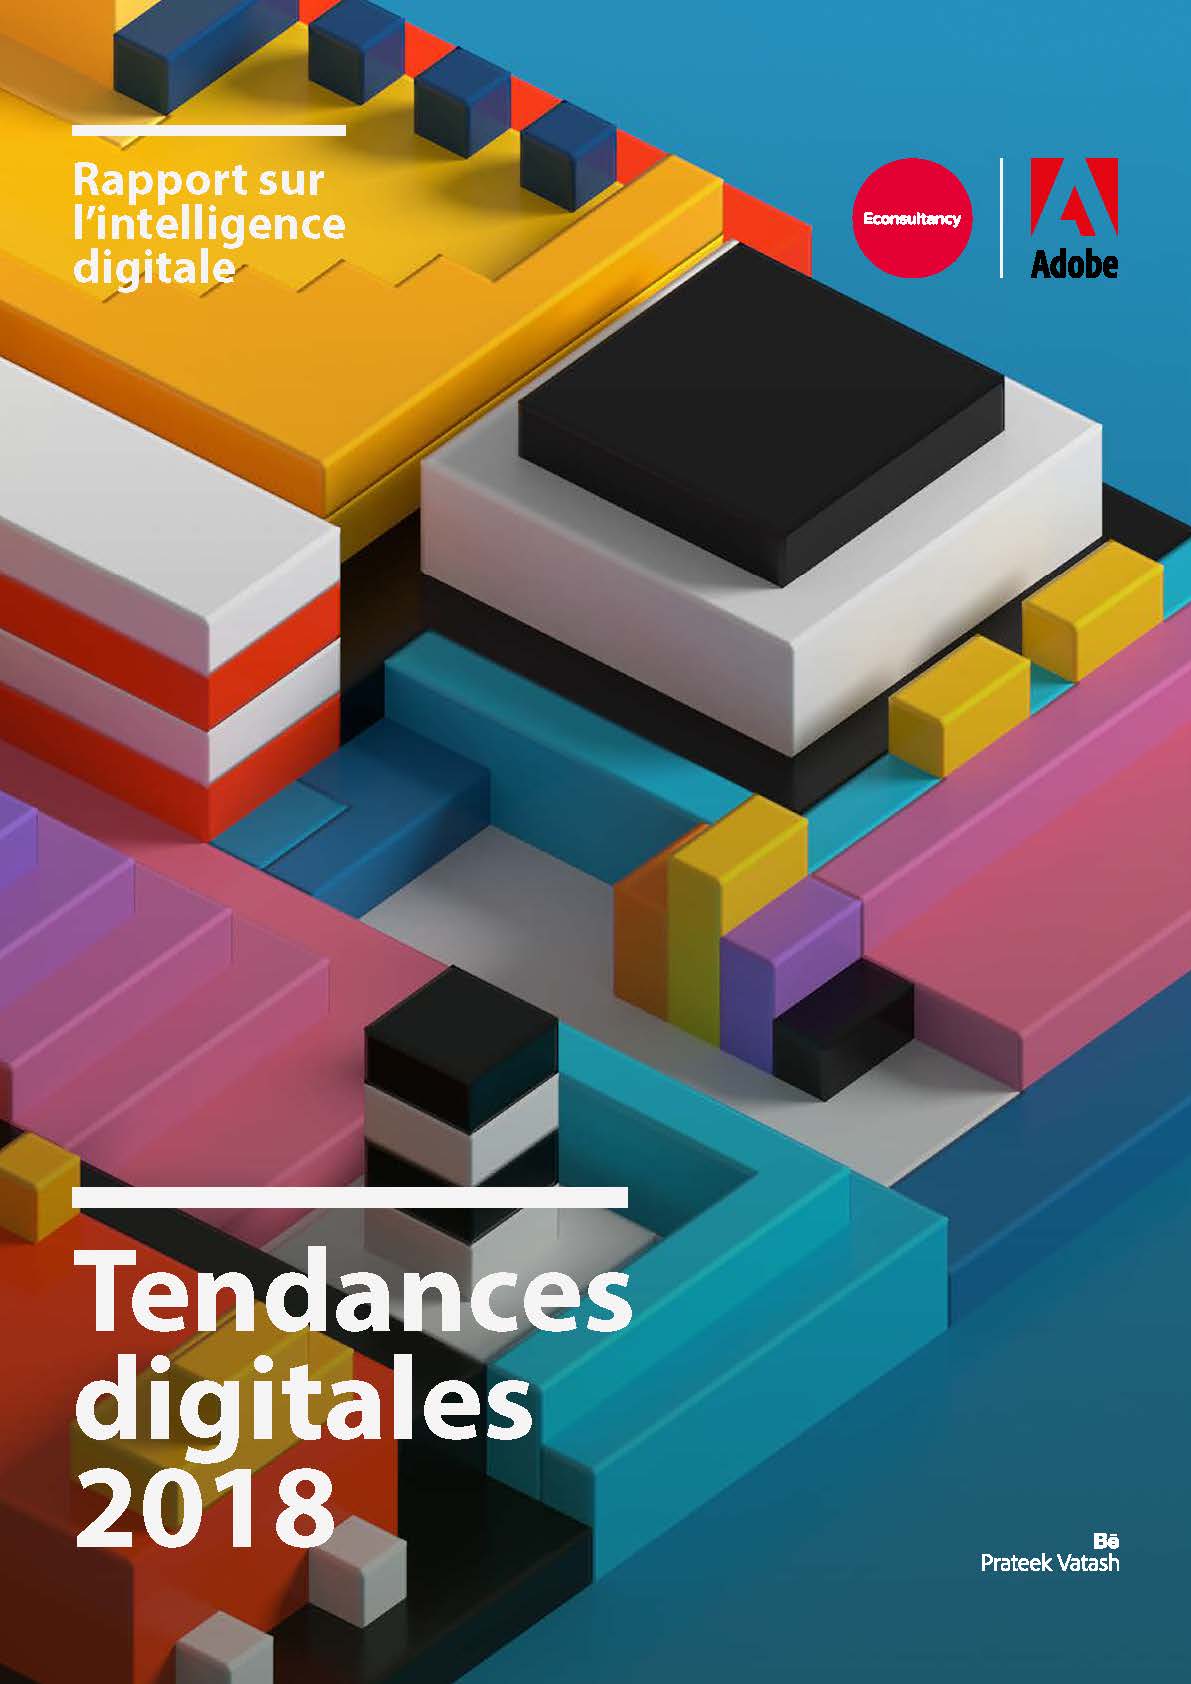 Tendances Digital Marketing 2018, d’après Adobe